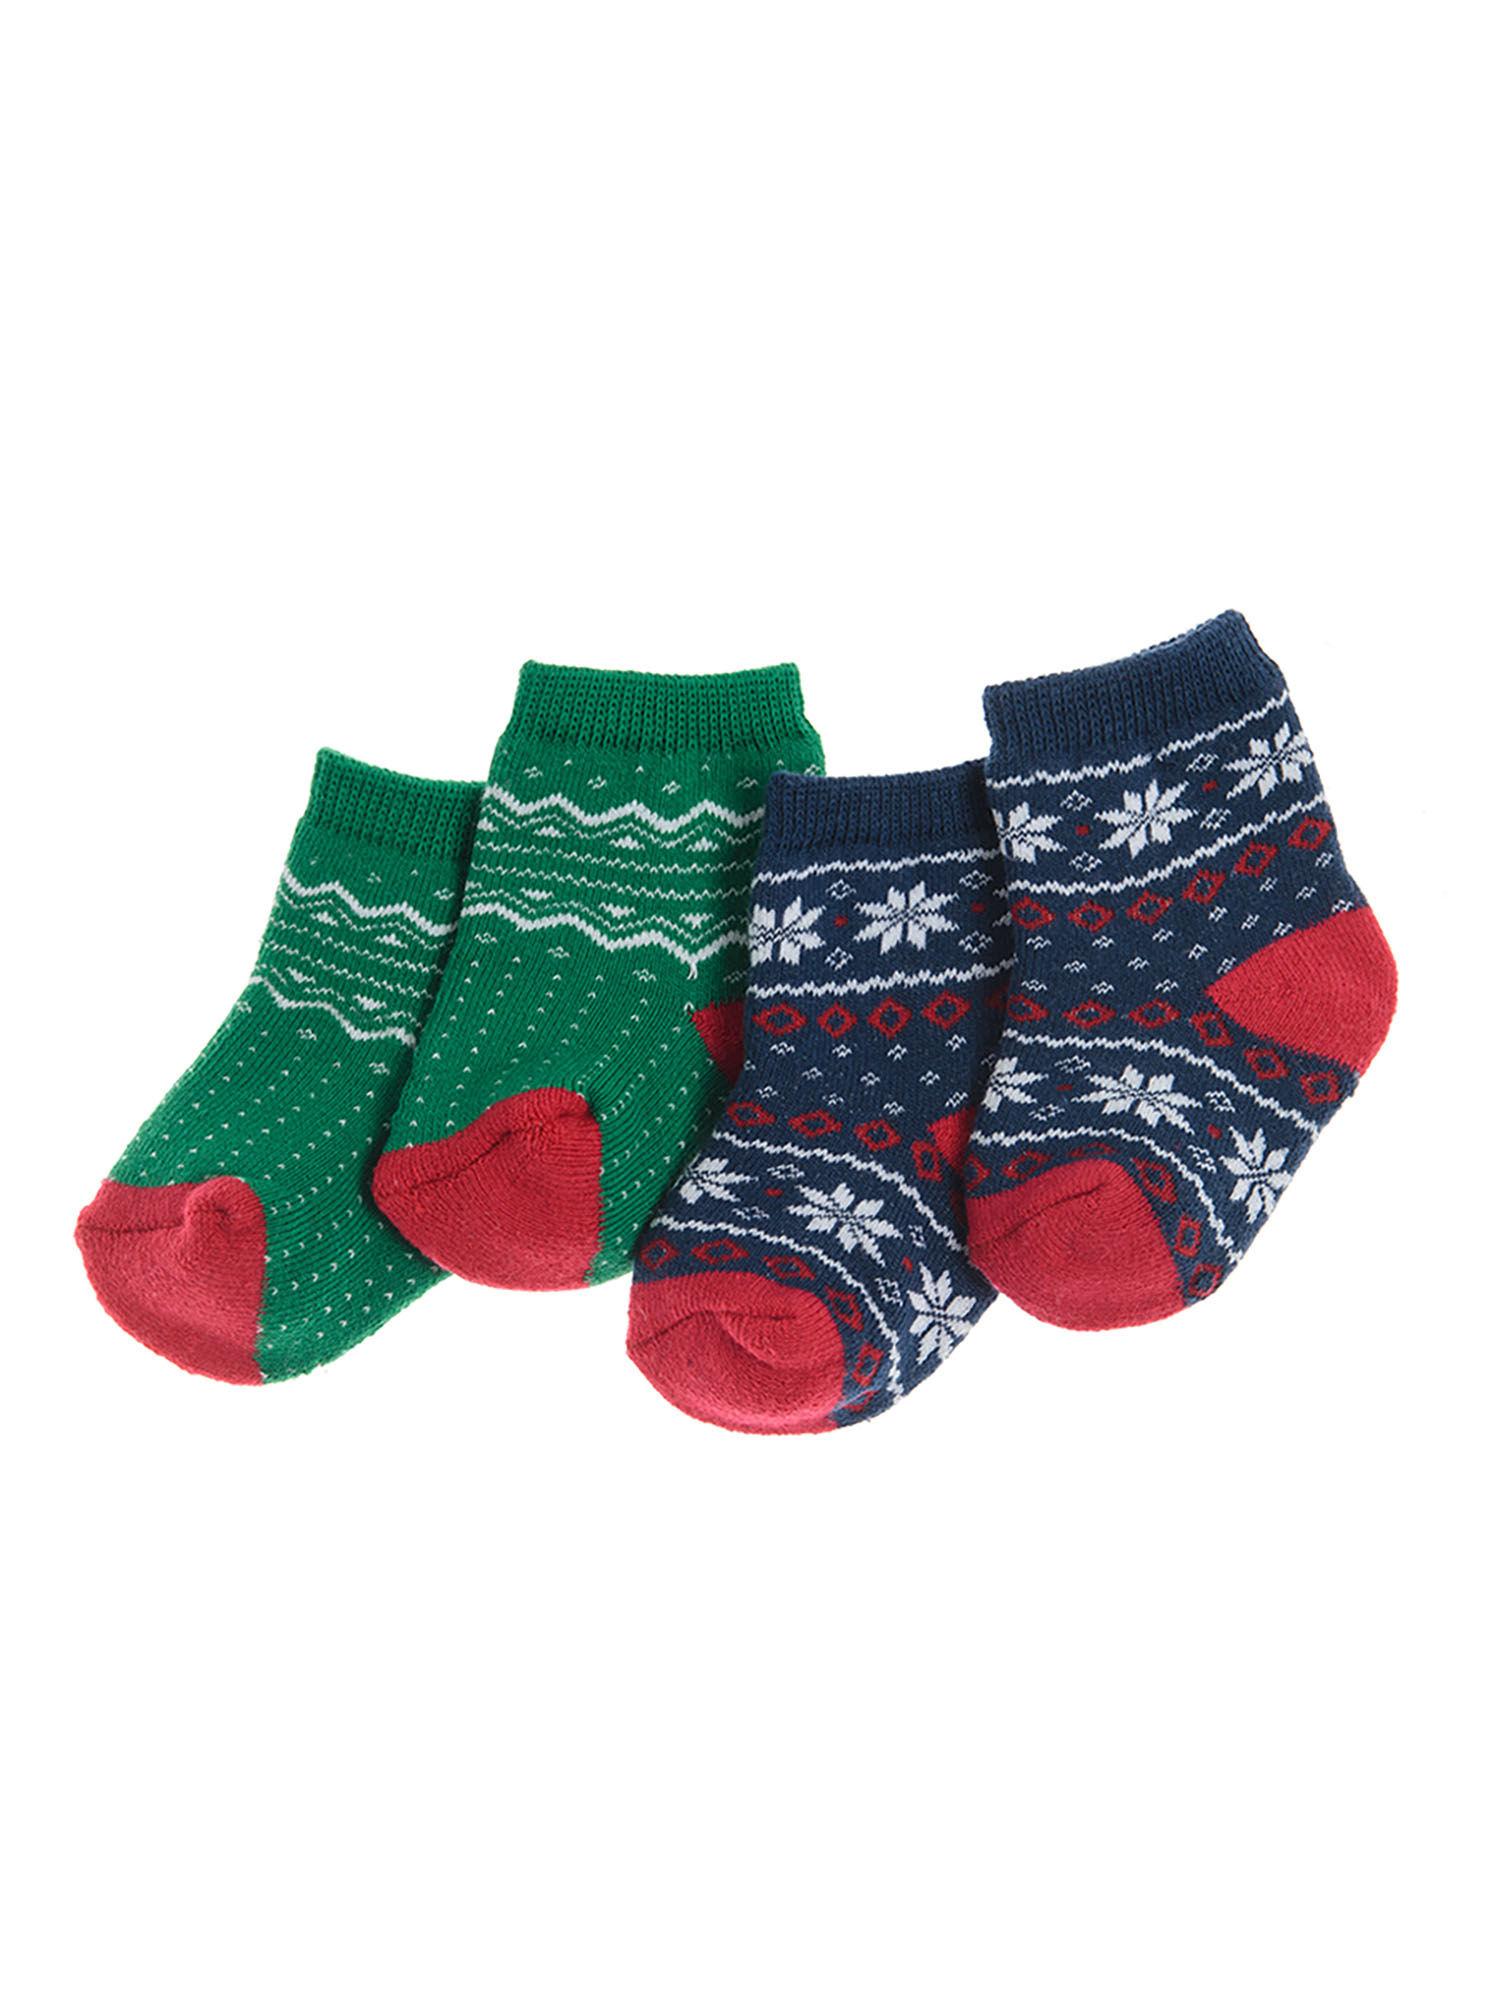 boys multi color printed socks (set of 2)